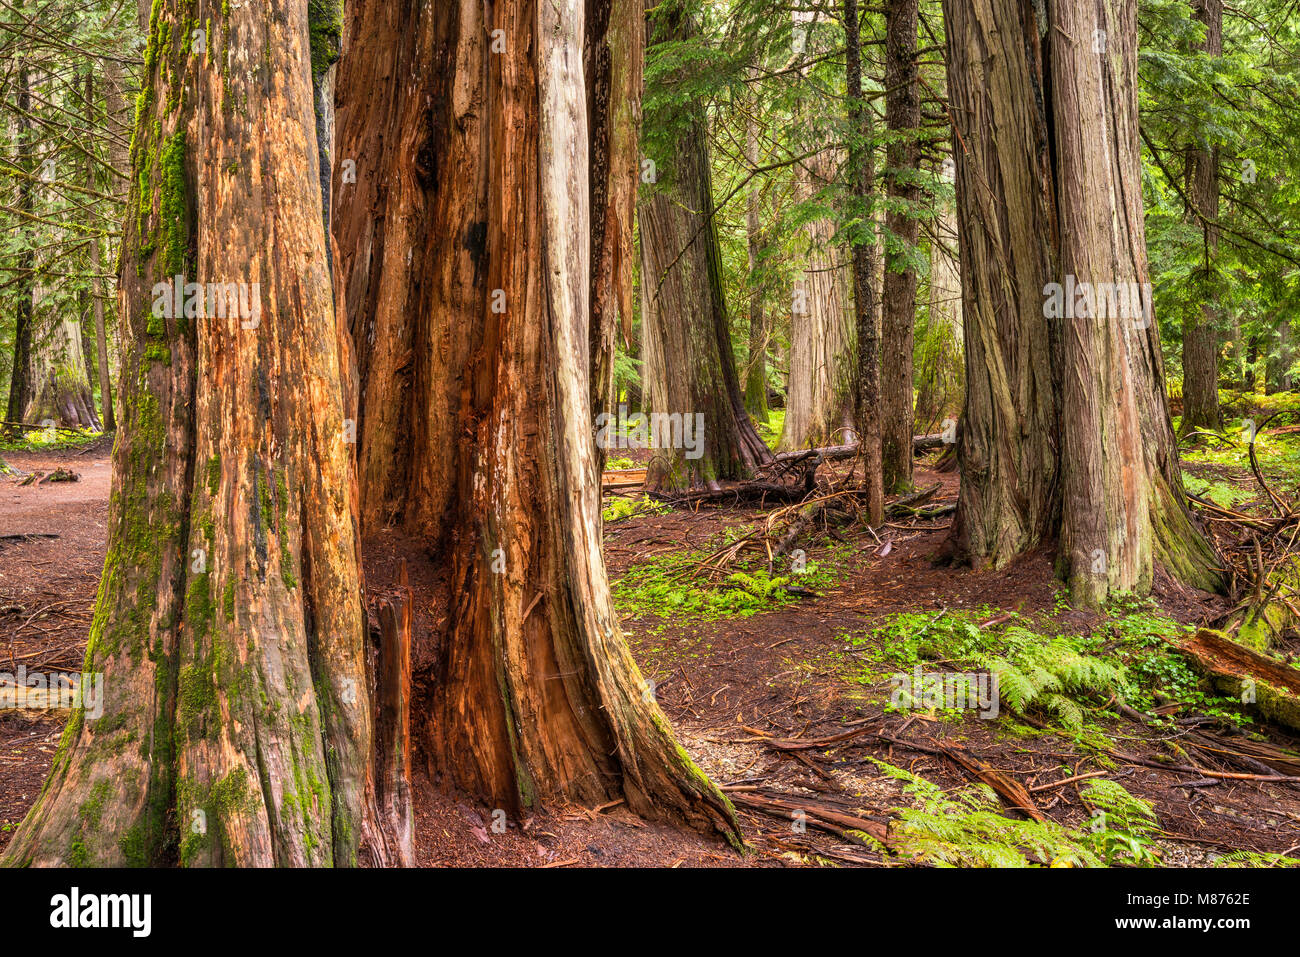 Western red cedar trees, Ross Creek Cedars Scenic Area, Bull Lake Road, temperate rainforest area in Kootenai National Forest, Montana, USA Stock Photo